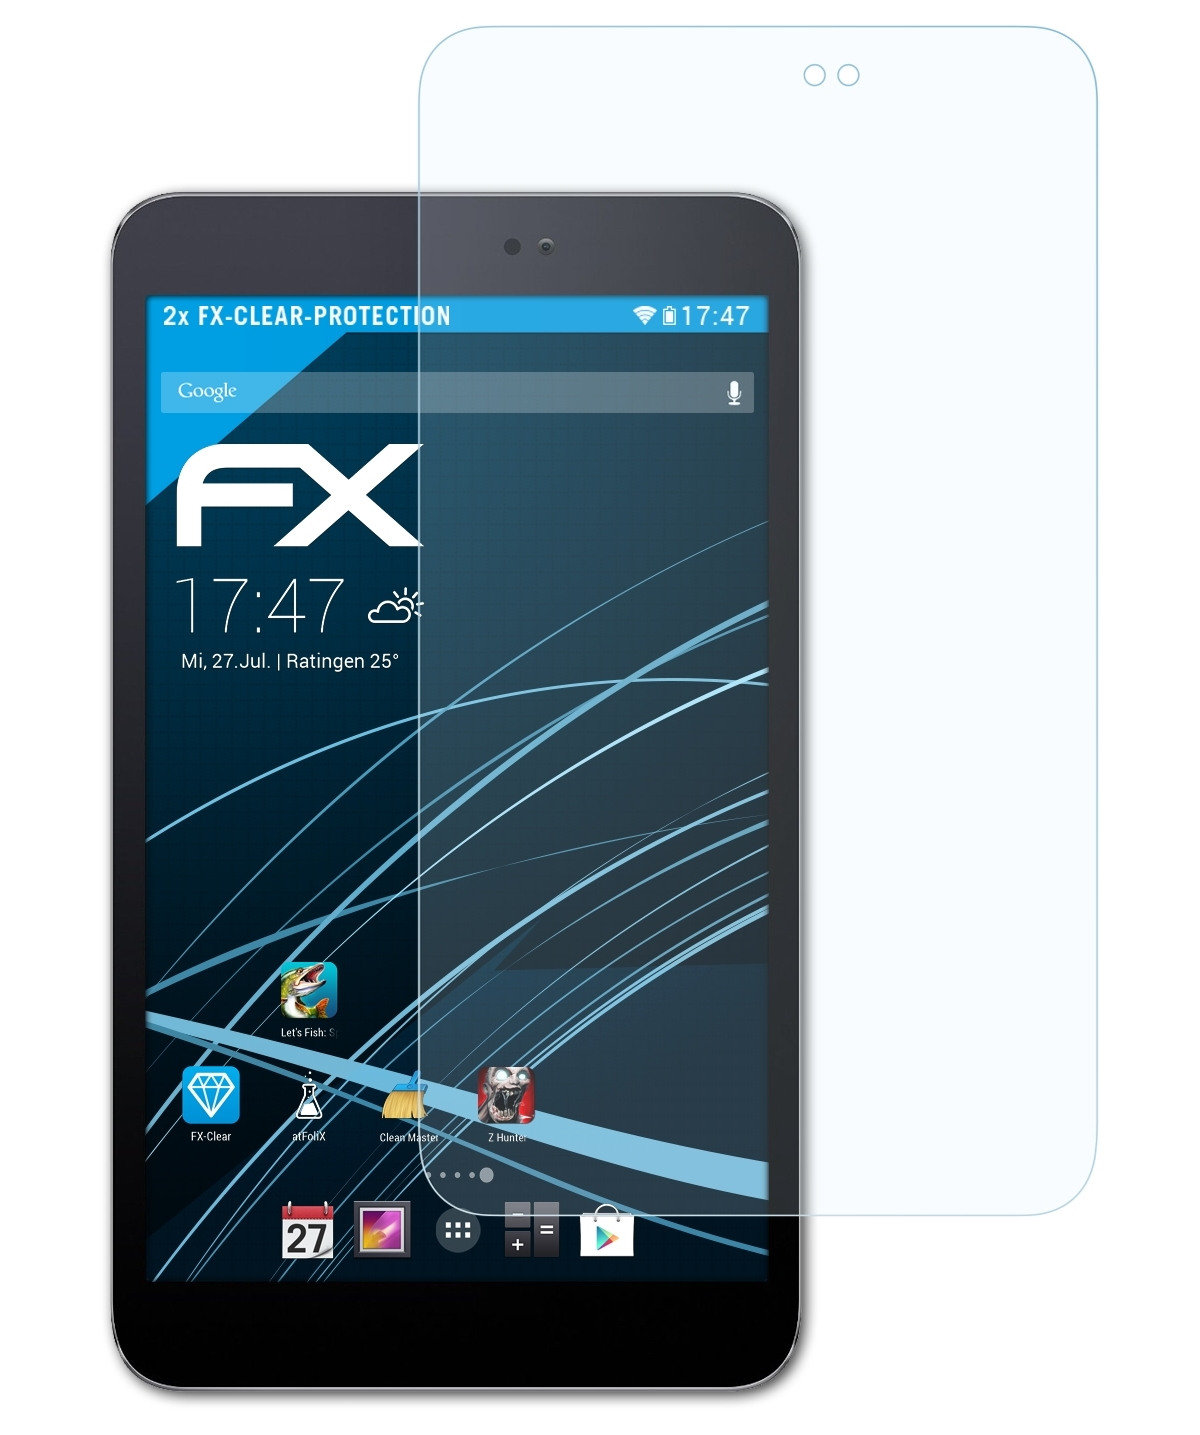 FX-Clear (ME581CL)) Pad MeMO Asus 2x 8 Displayschutz(für ATFOLIX